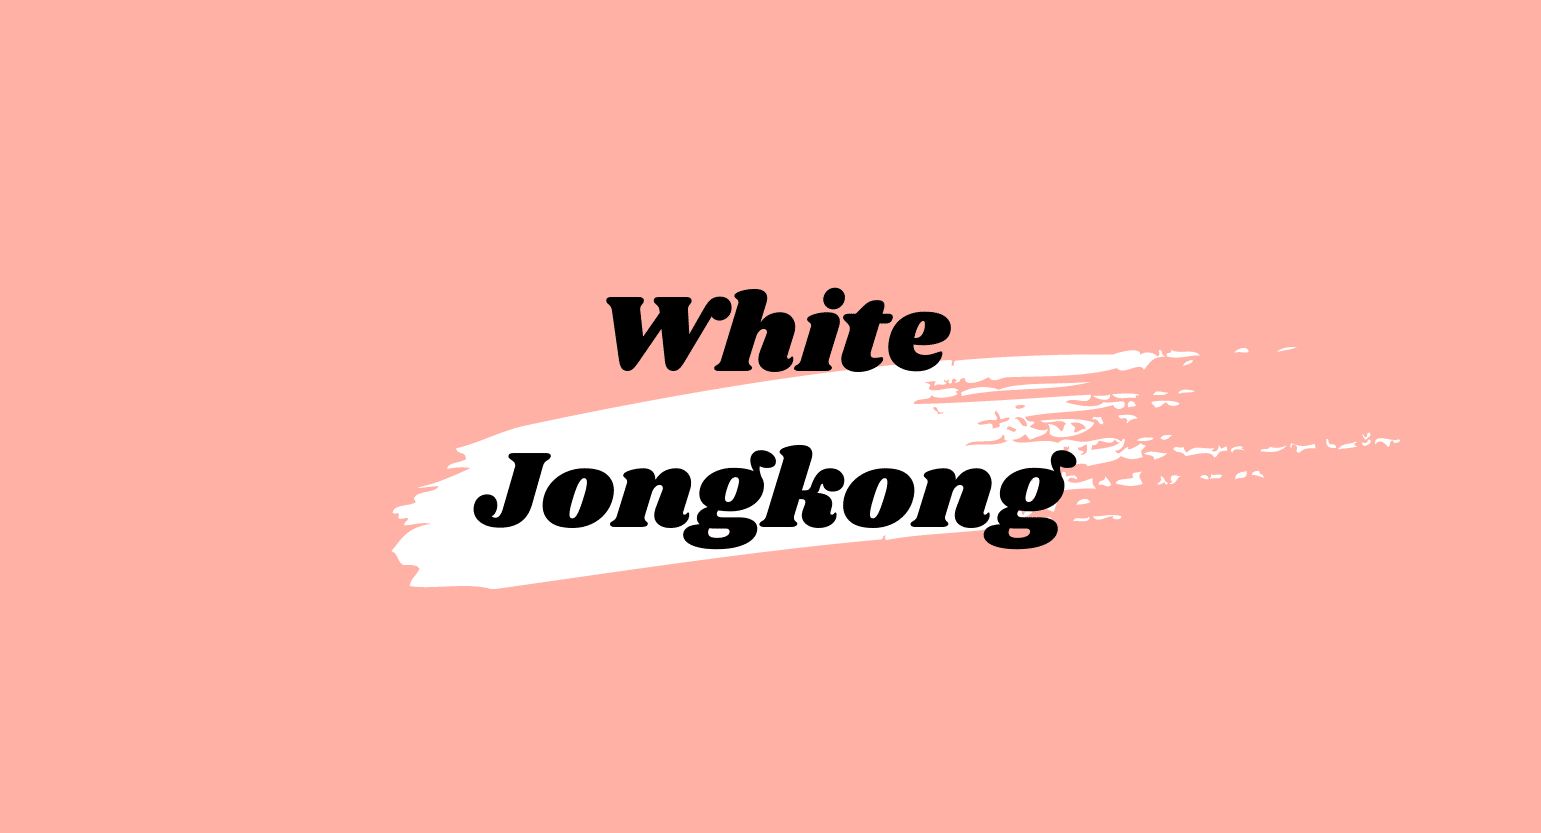 White Jongkong Kratom: Effects, Dosage, Safety & More